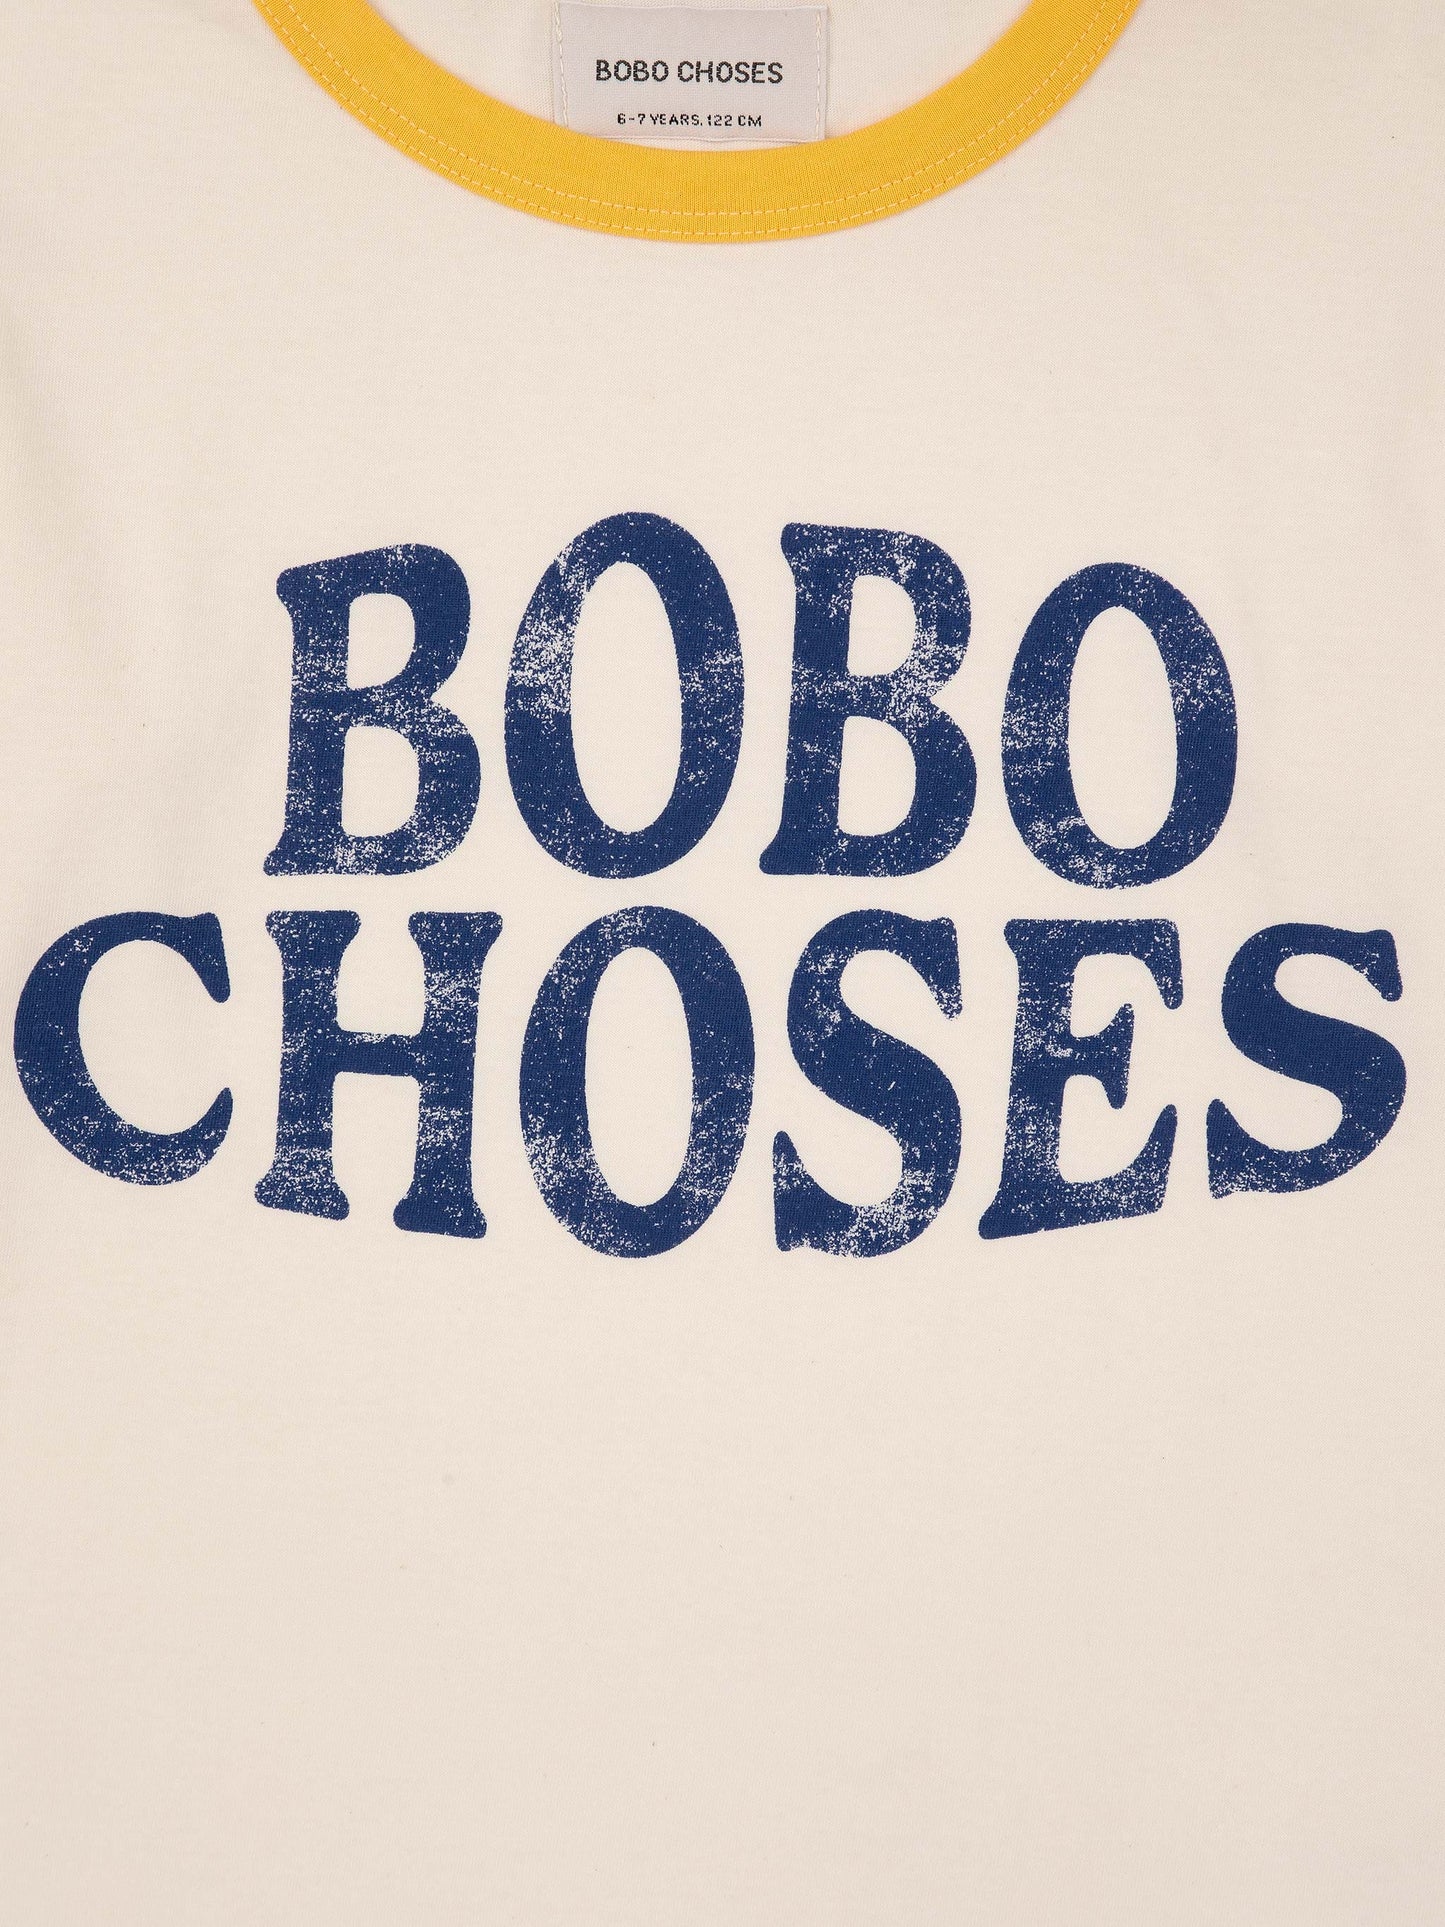 Samarreta Bobo Choses